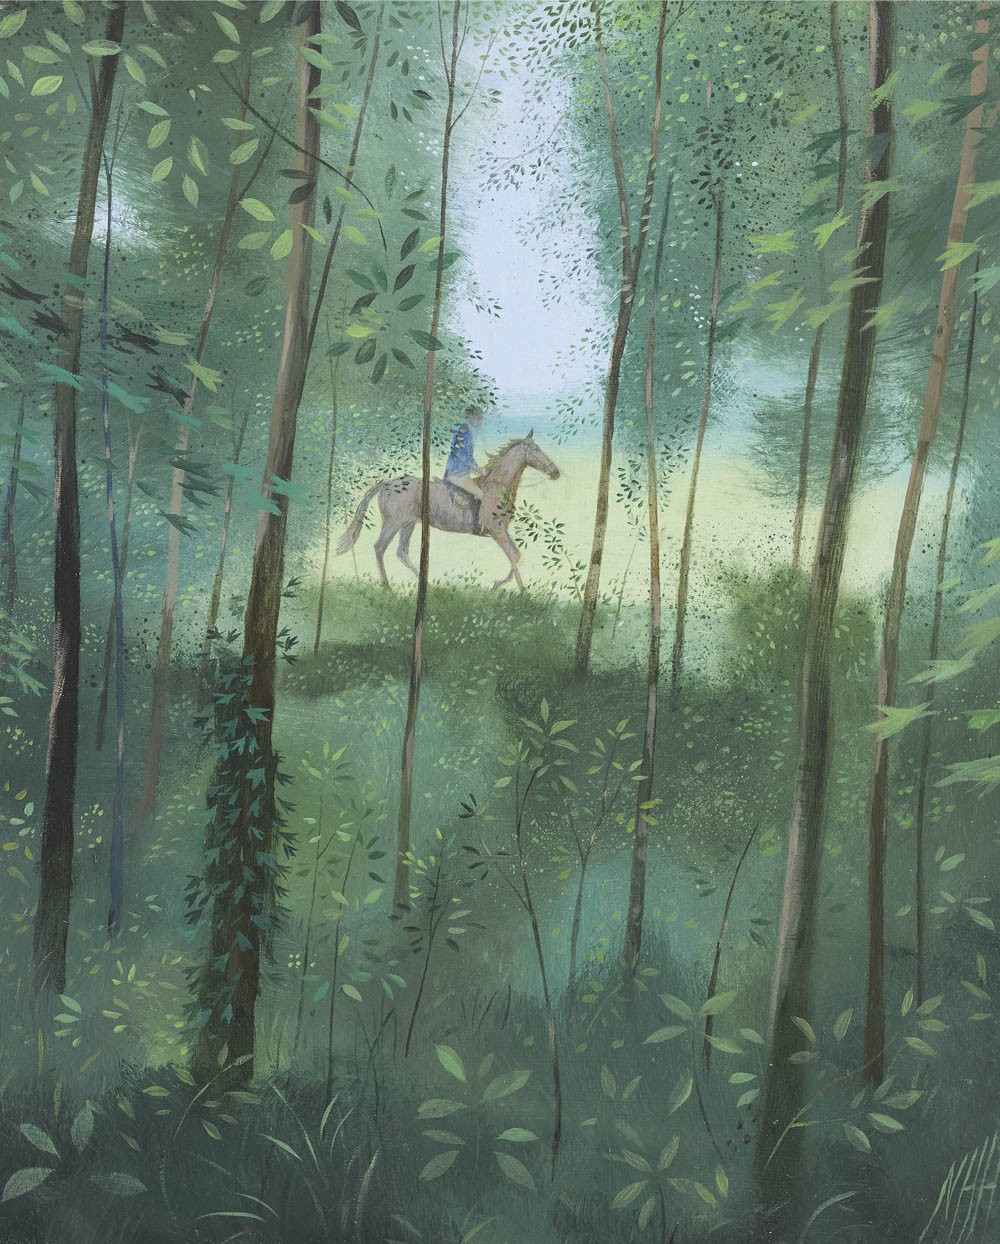 Horseman Through the Trees